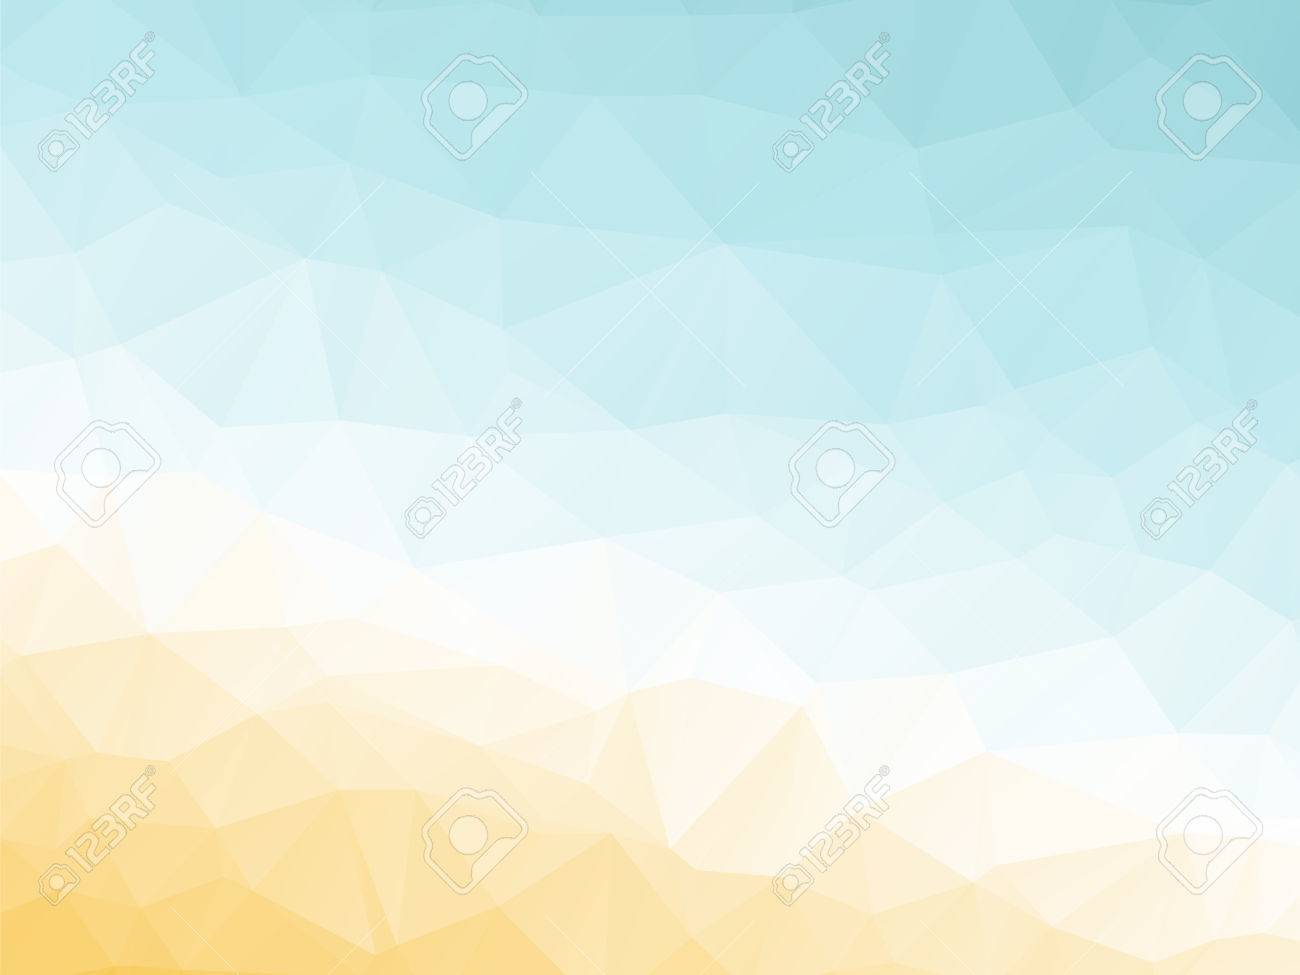 Abstract Triangular Yellow White Orange Summer Background Royalty